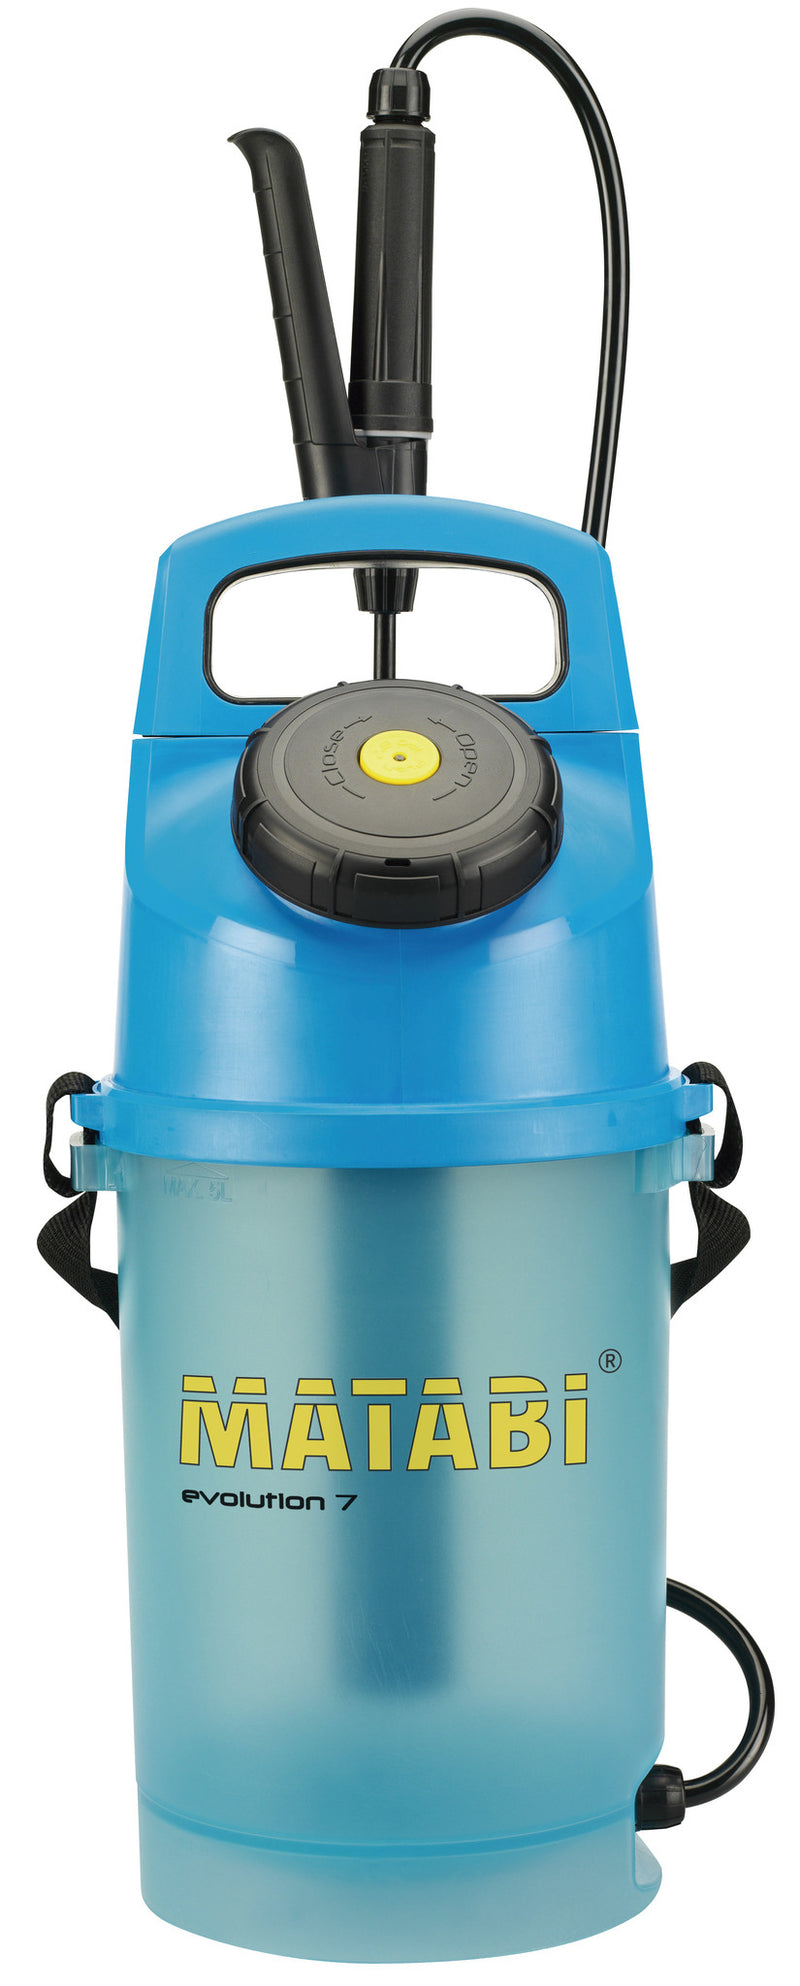 MATABI pressure sprayer 5 liters